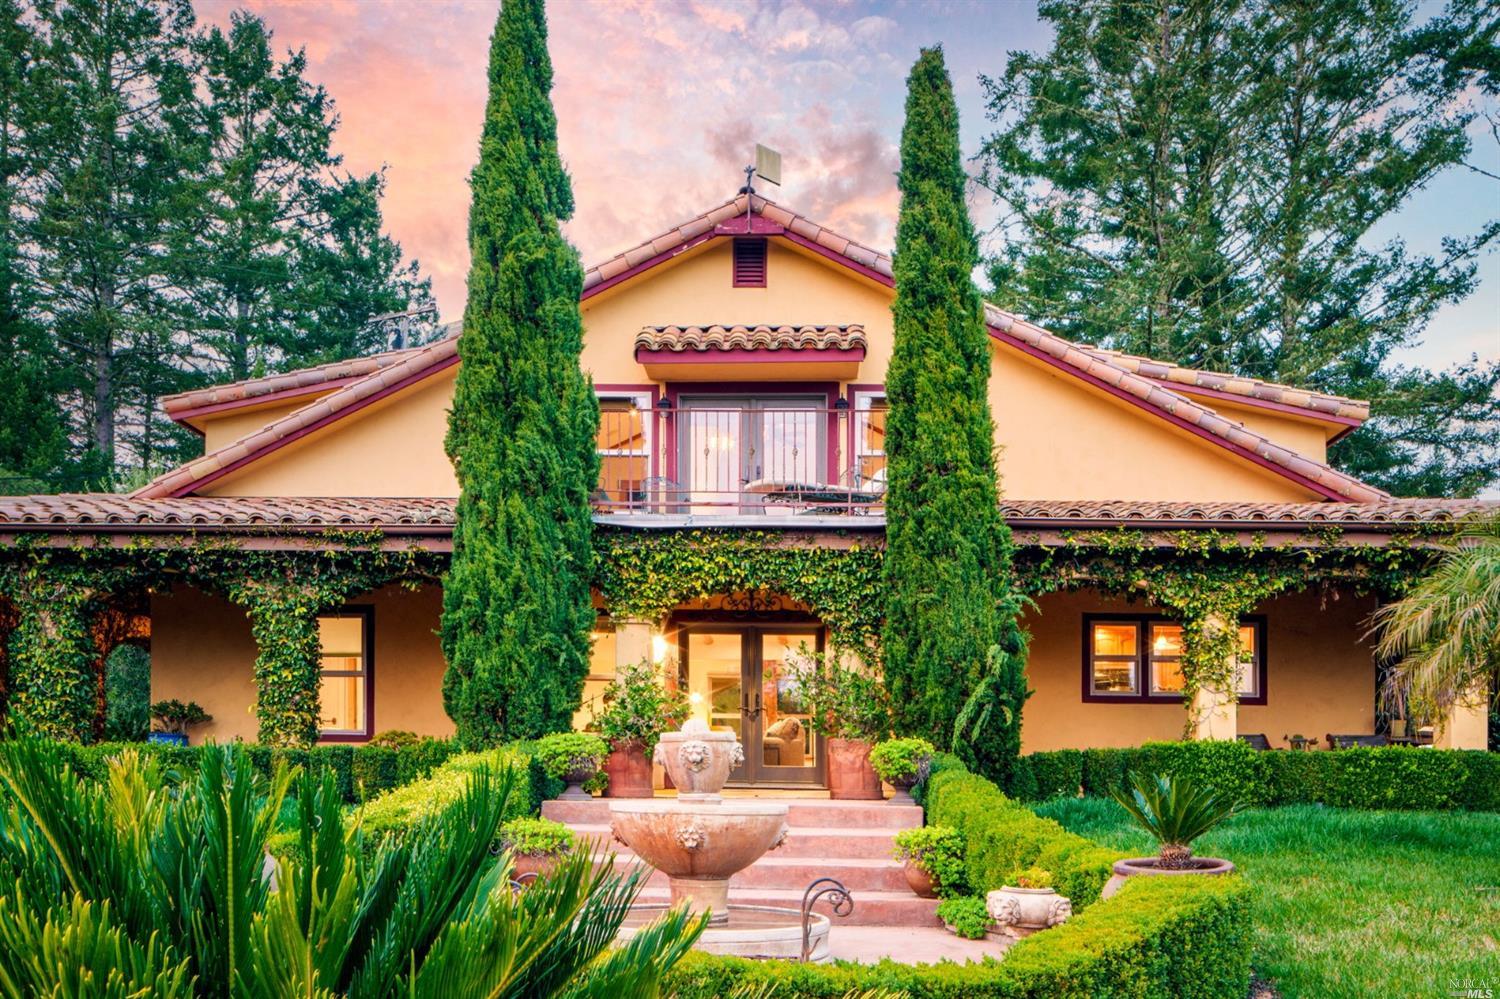 Occidental, CA Real Estate Housing Market & Trends | Coldwell Banker